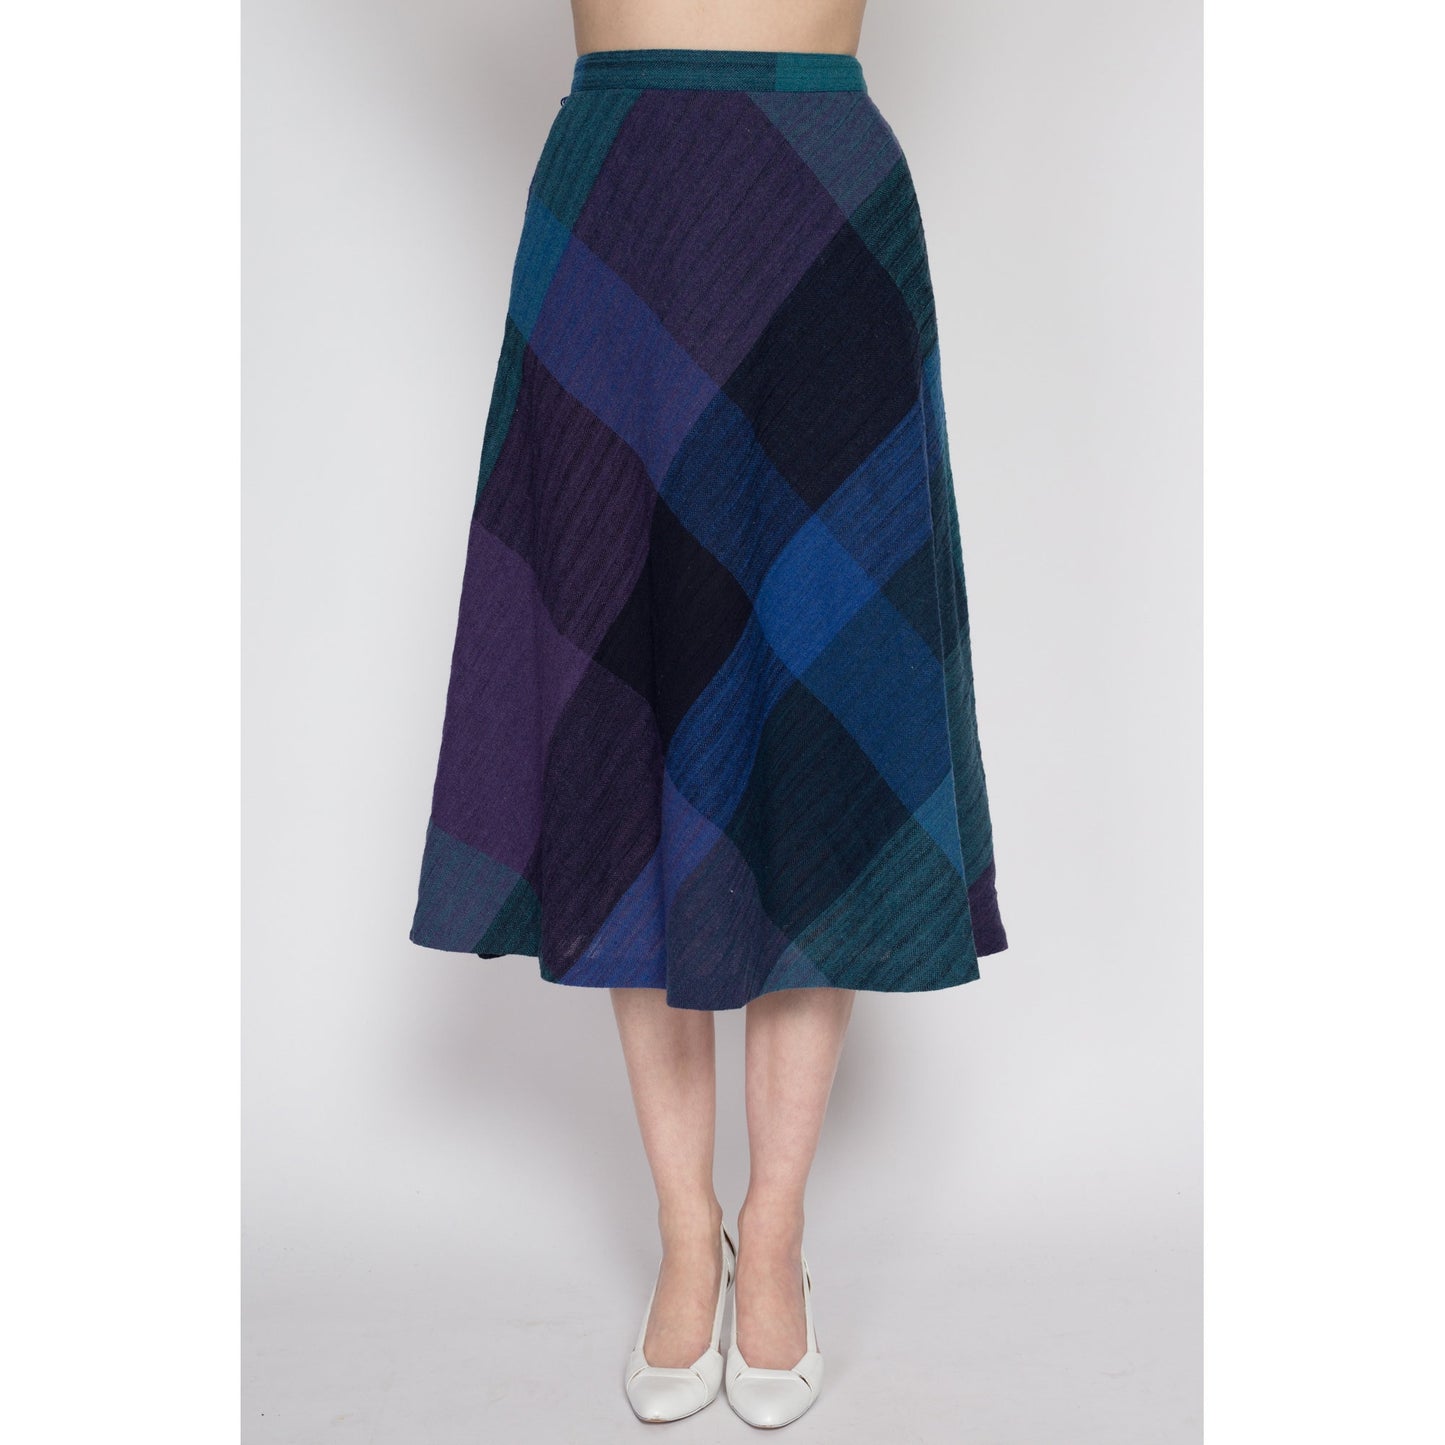 Medium 70s Dark Plaid A Line Midi Skirt 28" | Vintage Blue Purple Green Preppy High Waisted Flowy Pocket Skirt